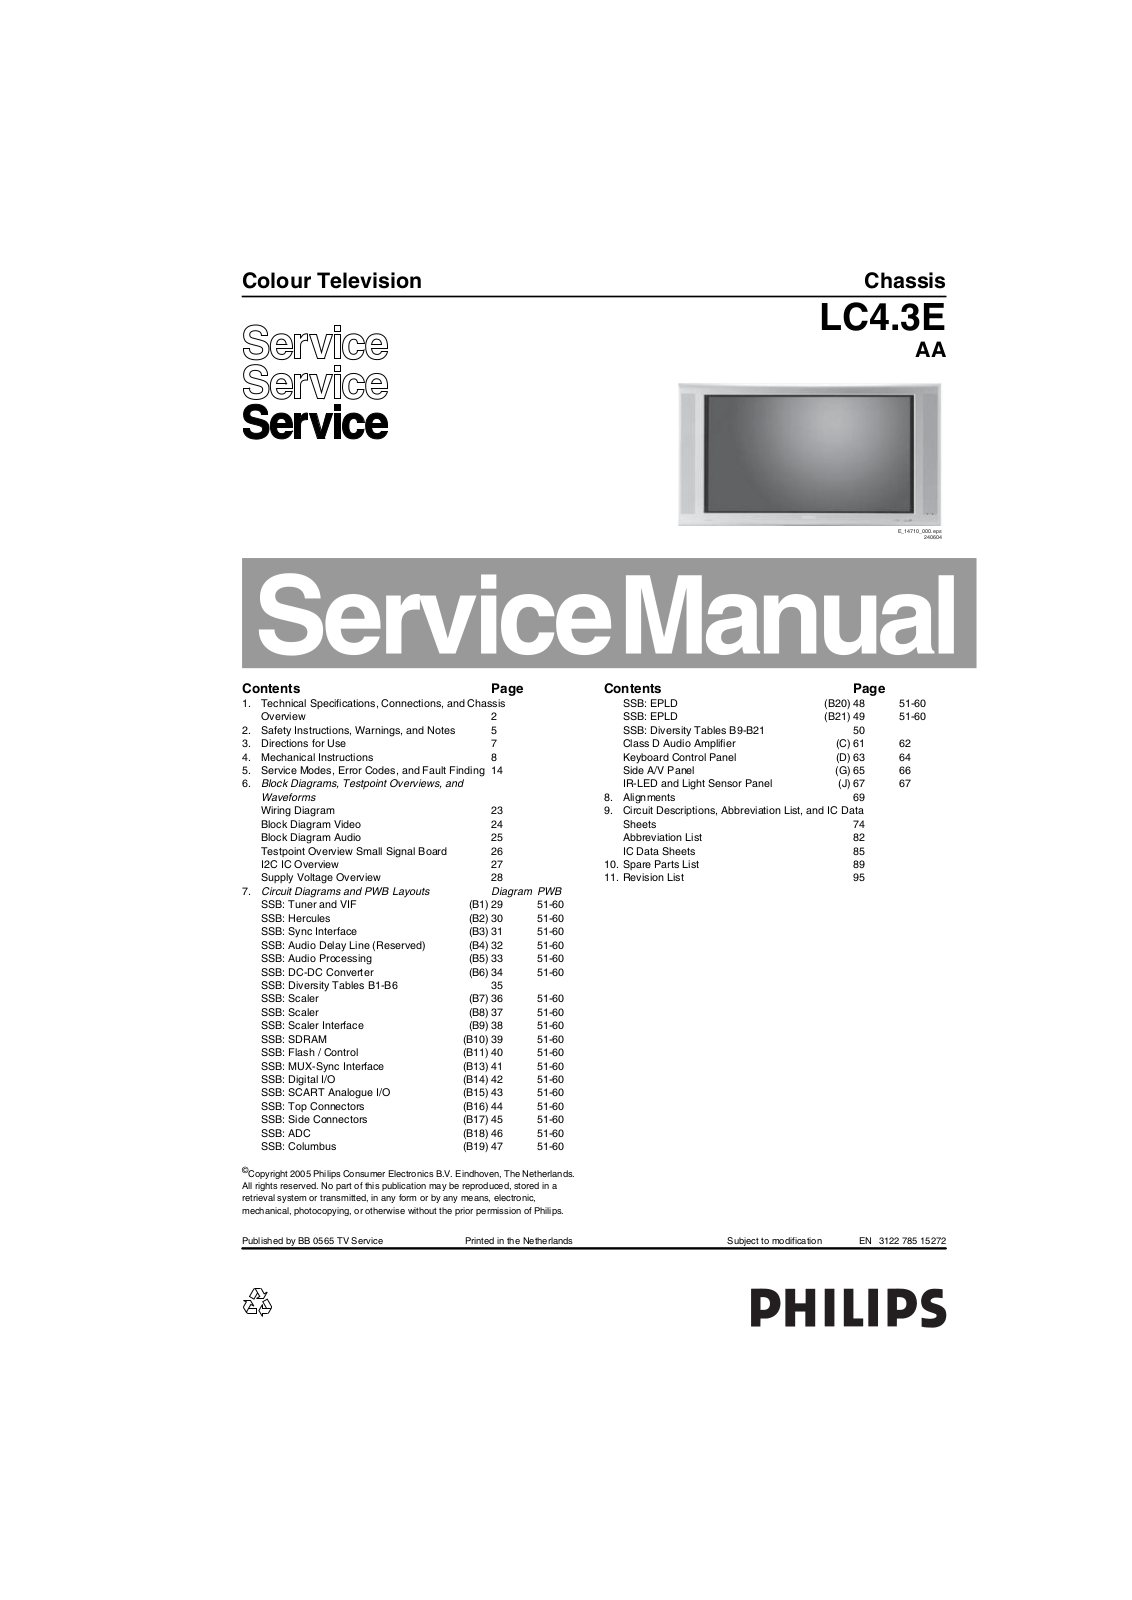 Philips LC4.3E-AA Service Manual